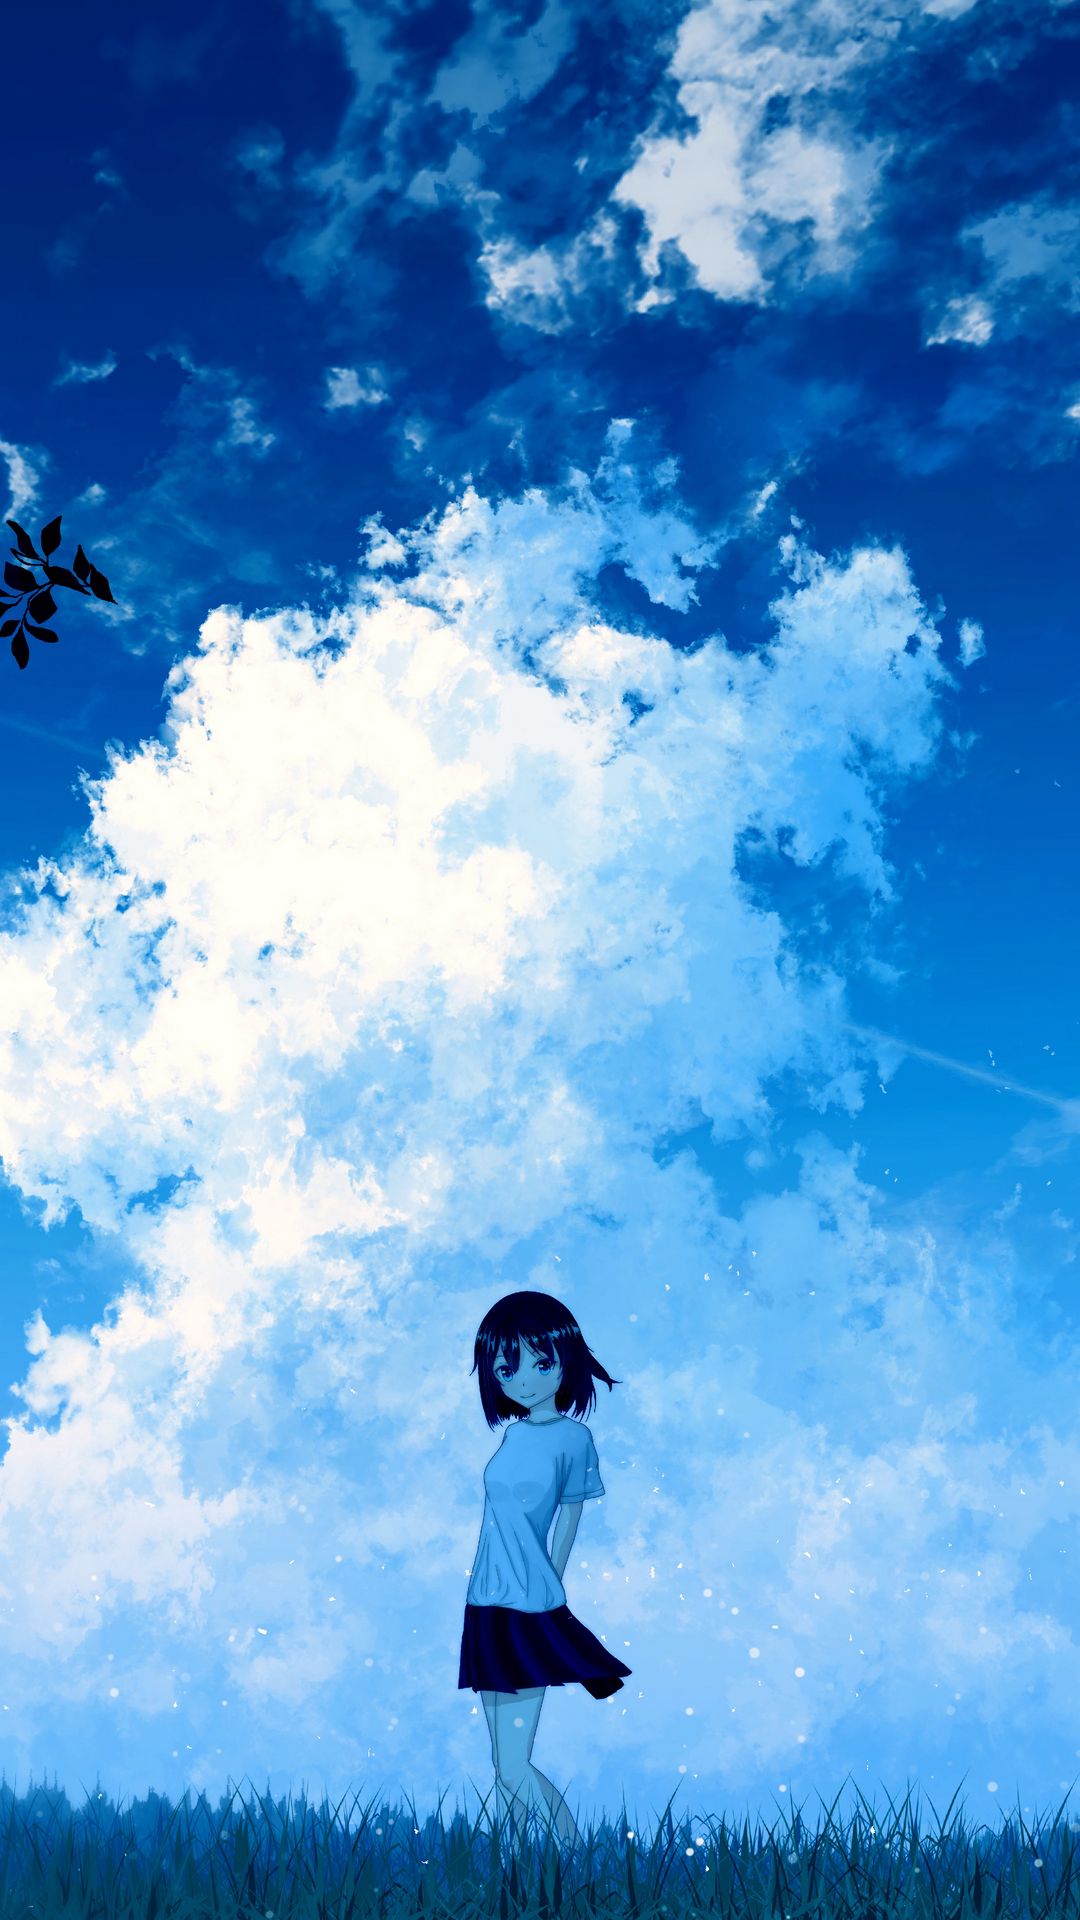 Download wallpaper 1080x1920 anime girl sky clouds samsung galaxy s4  s5 note sony xperia z z1 z2 z3 htc one lenovo vibe hd background